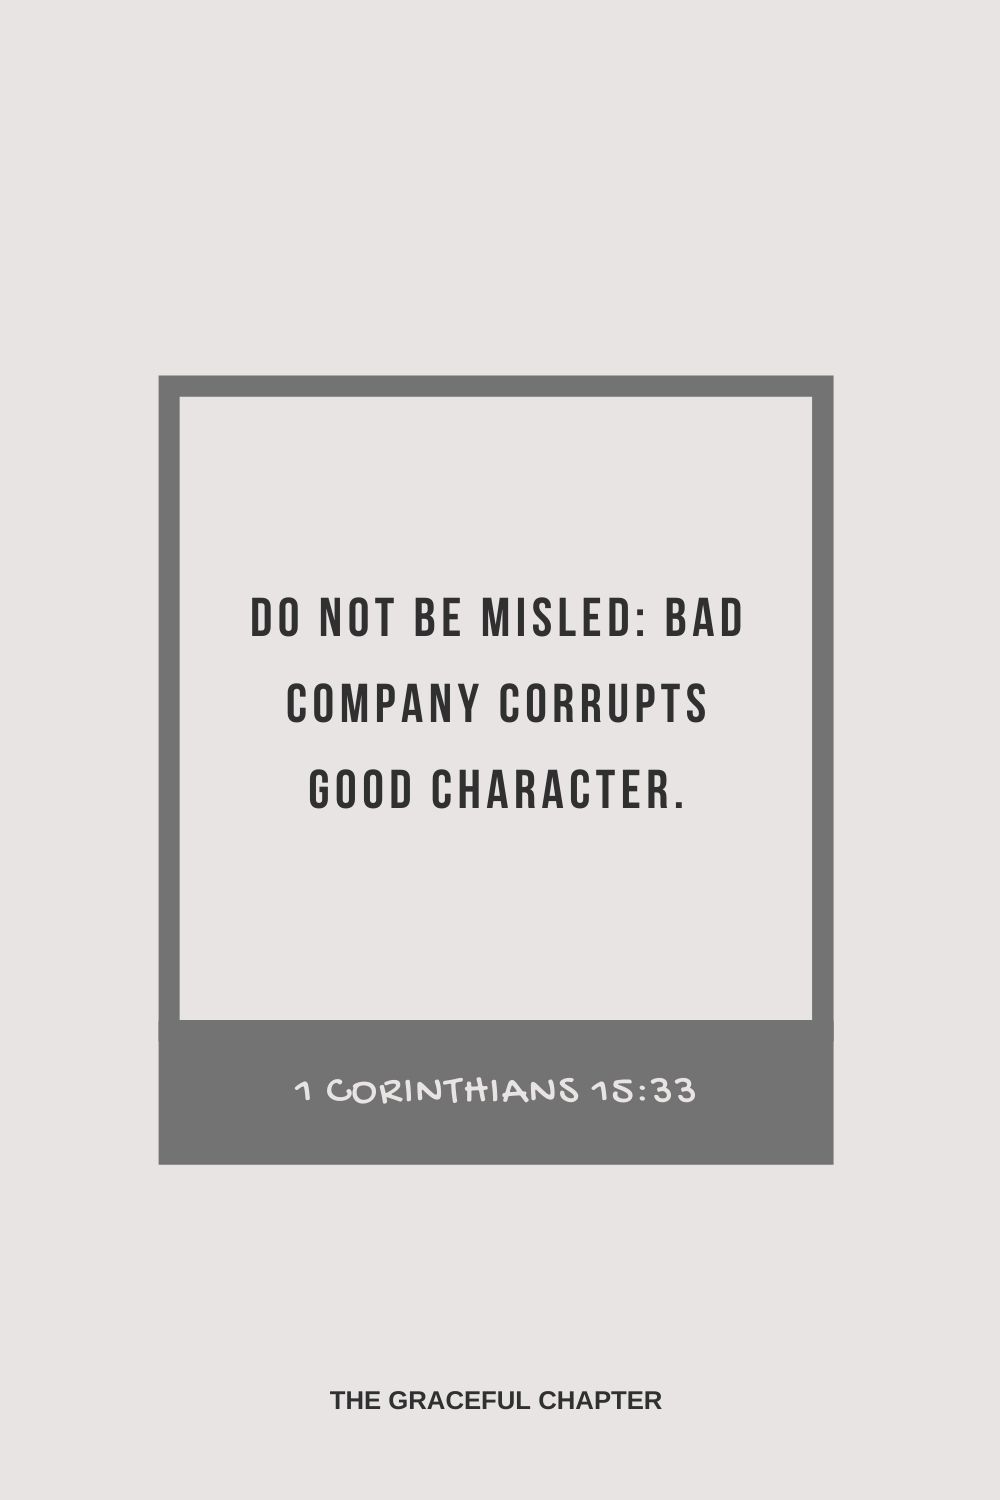 Do not be misled: Bad company corrupts good character. 1 Corinthians 15:33